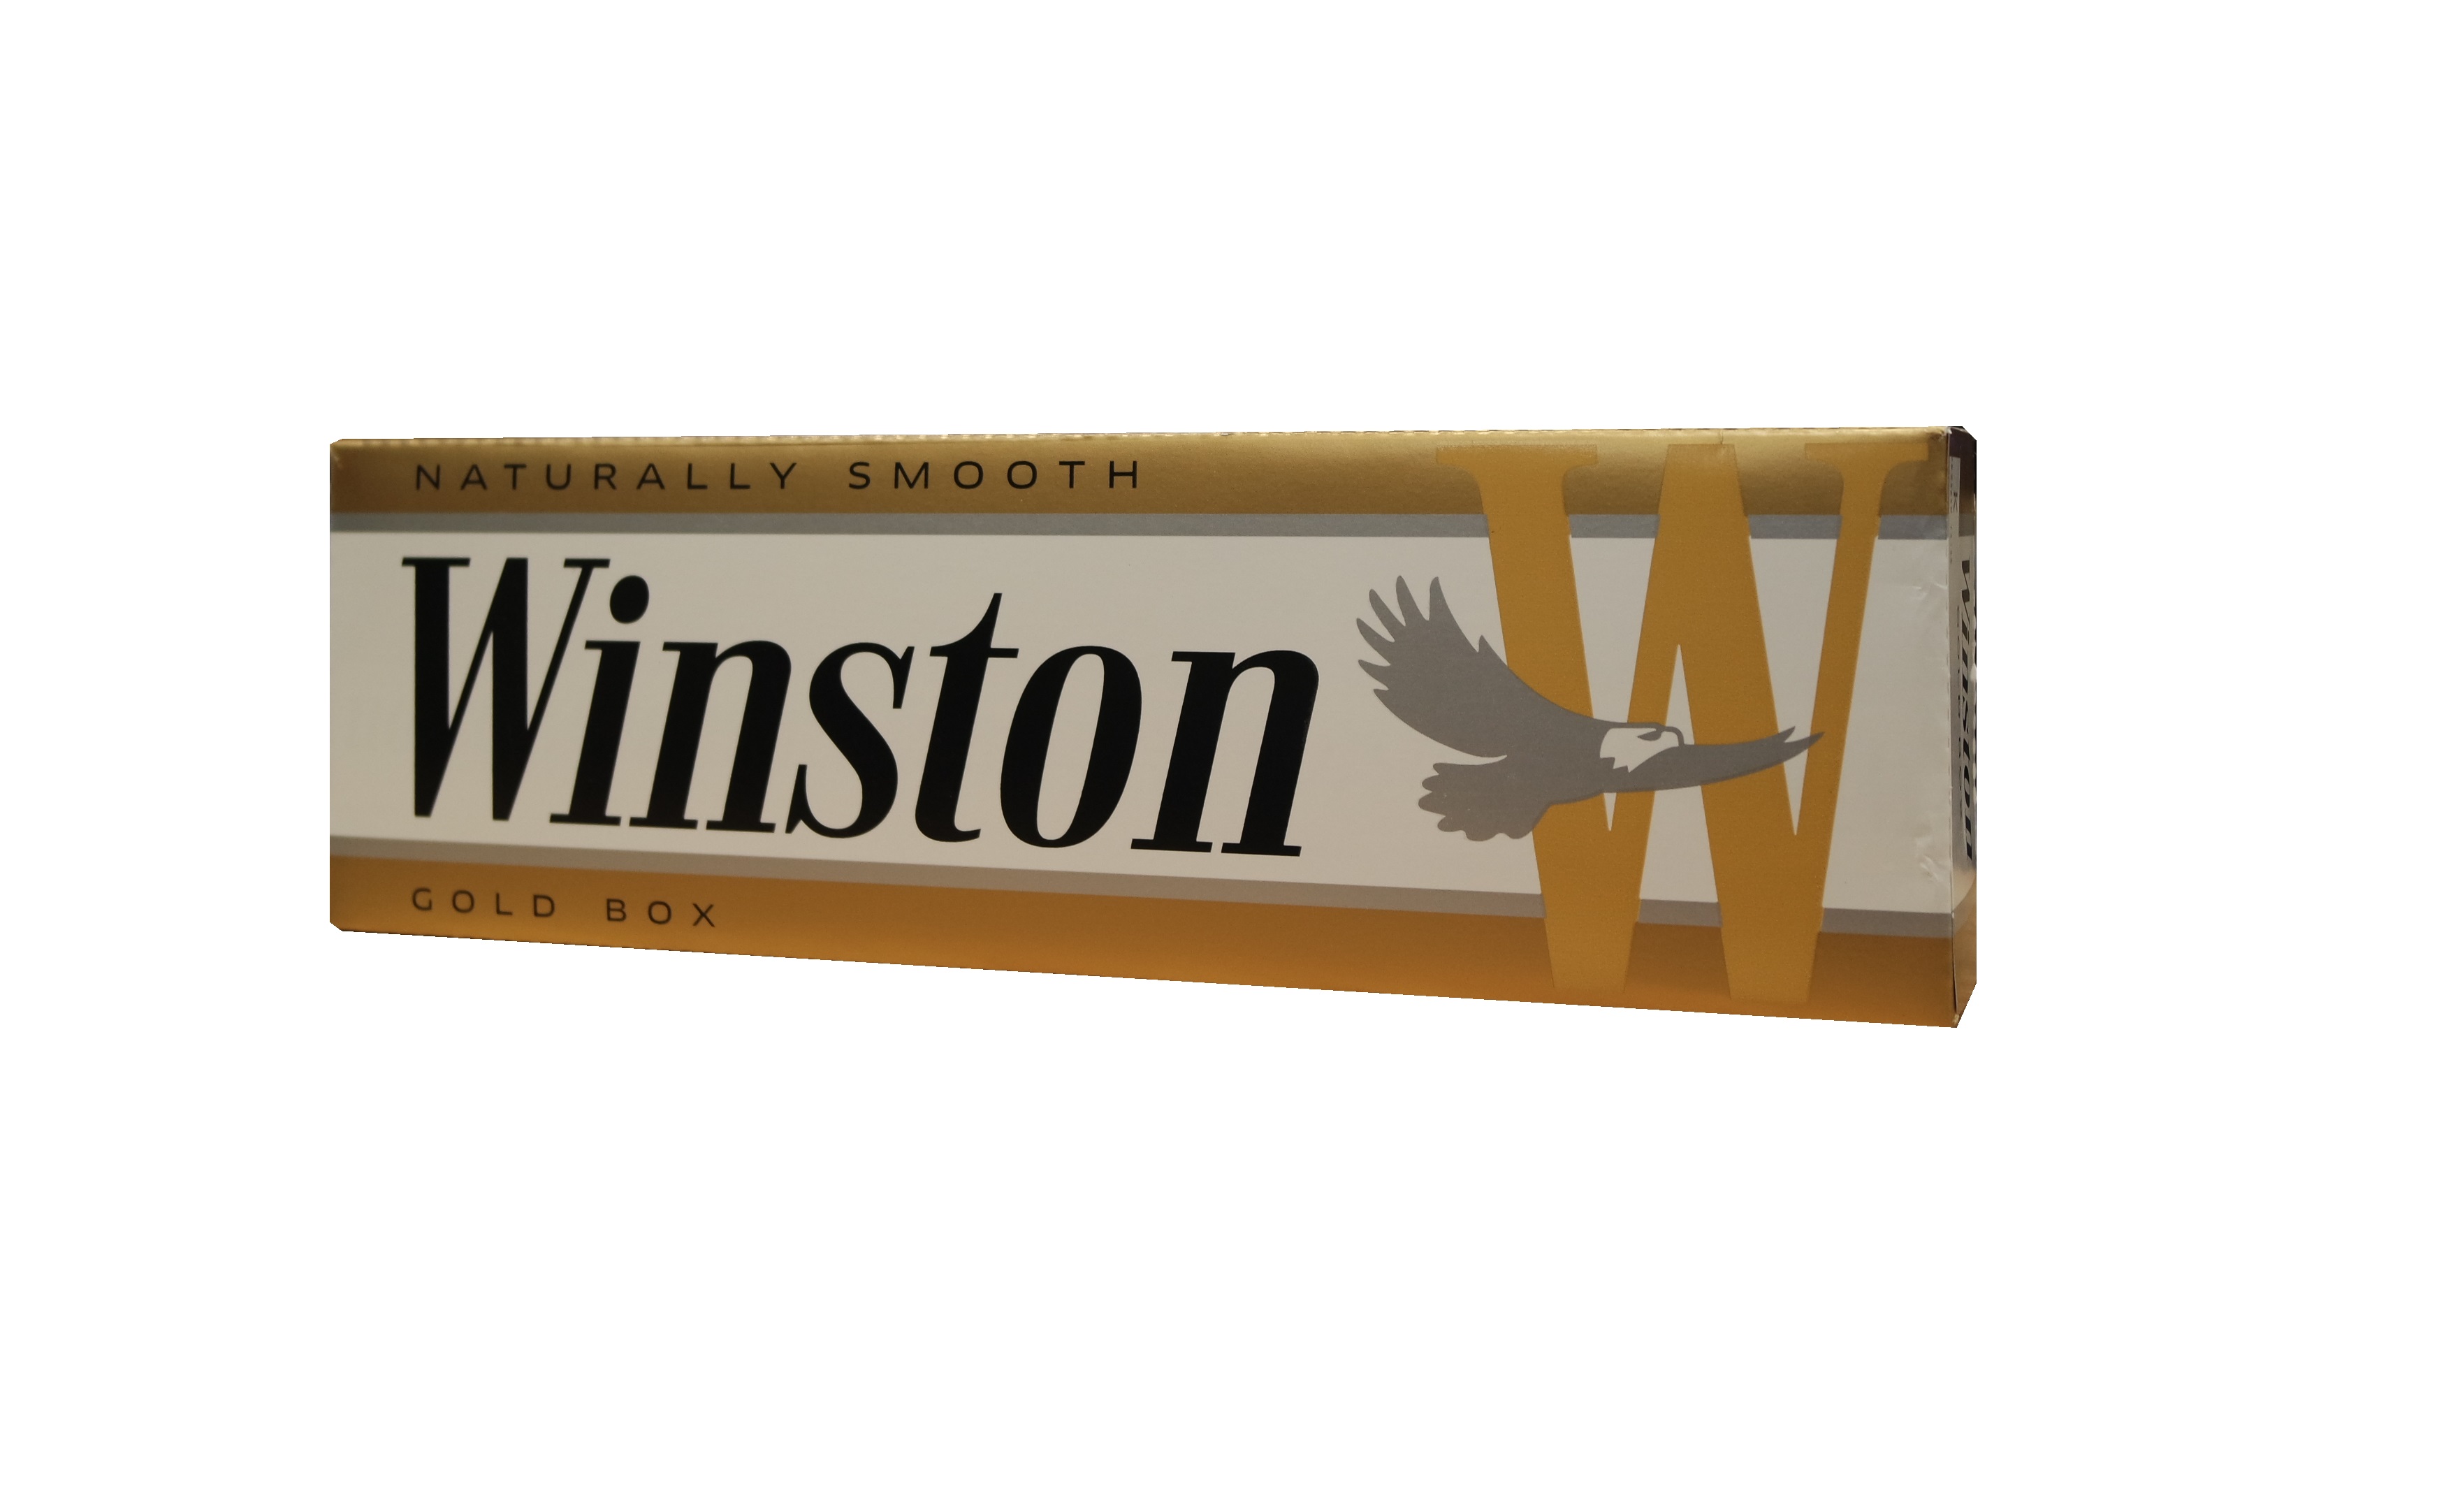 Winston gold box